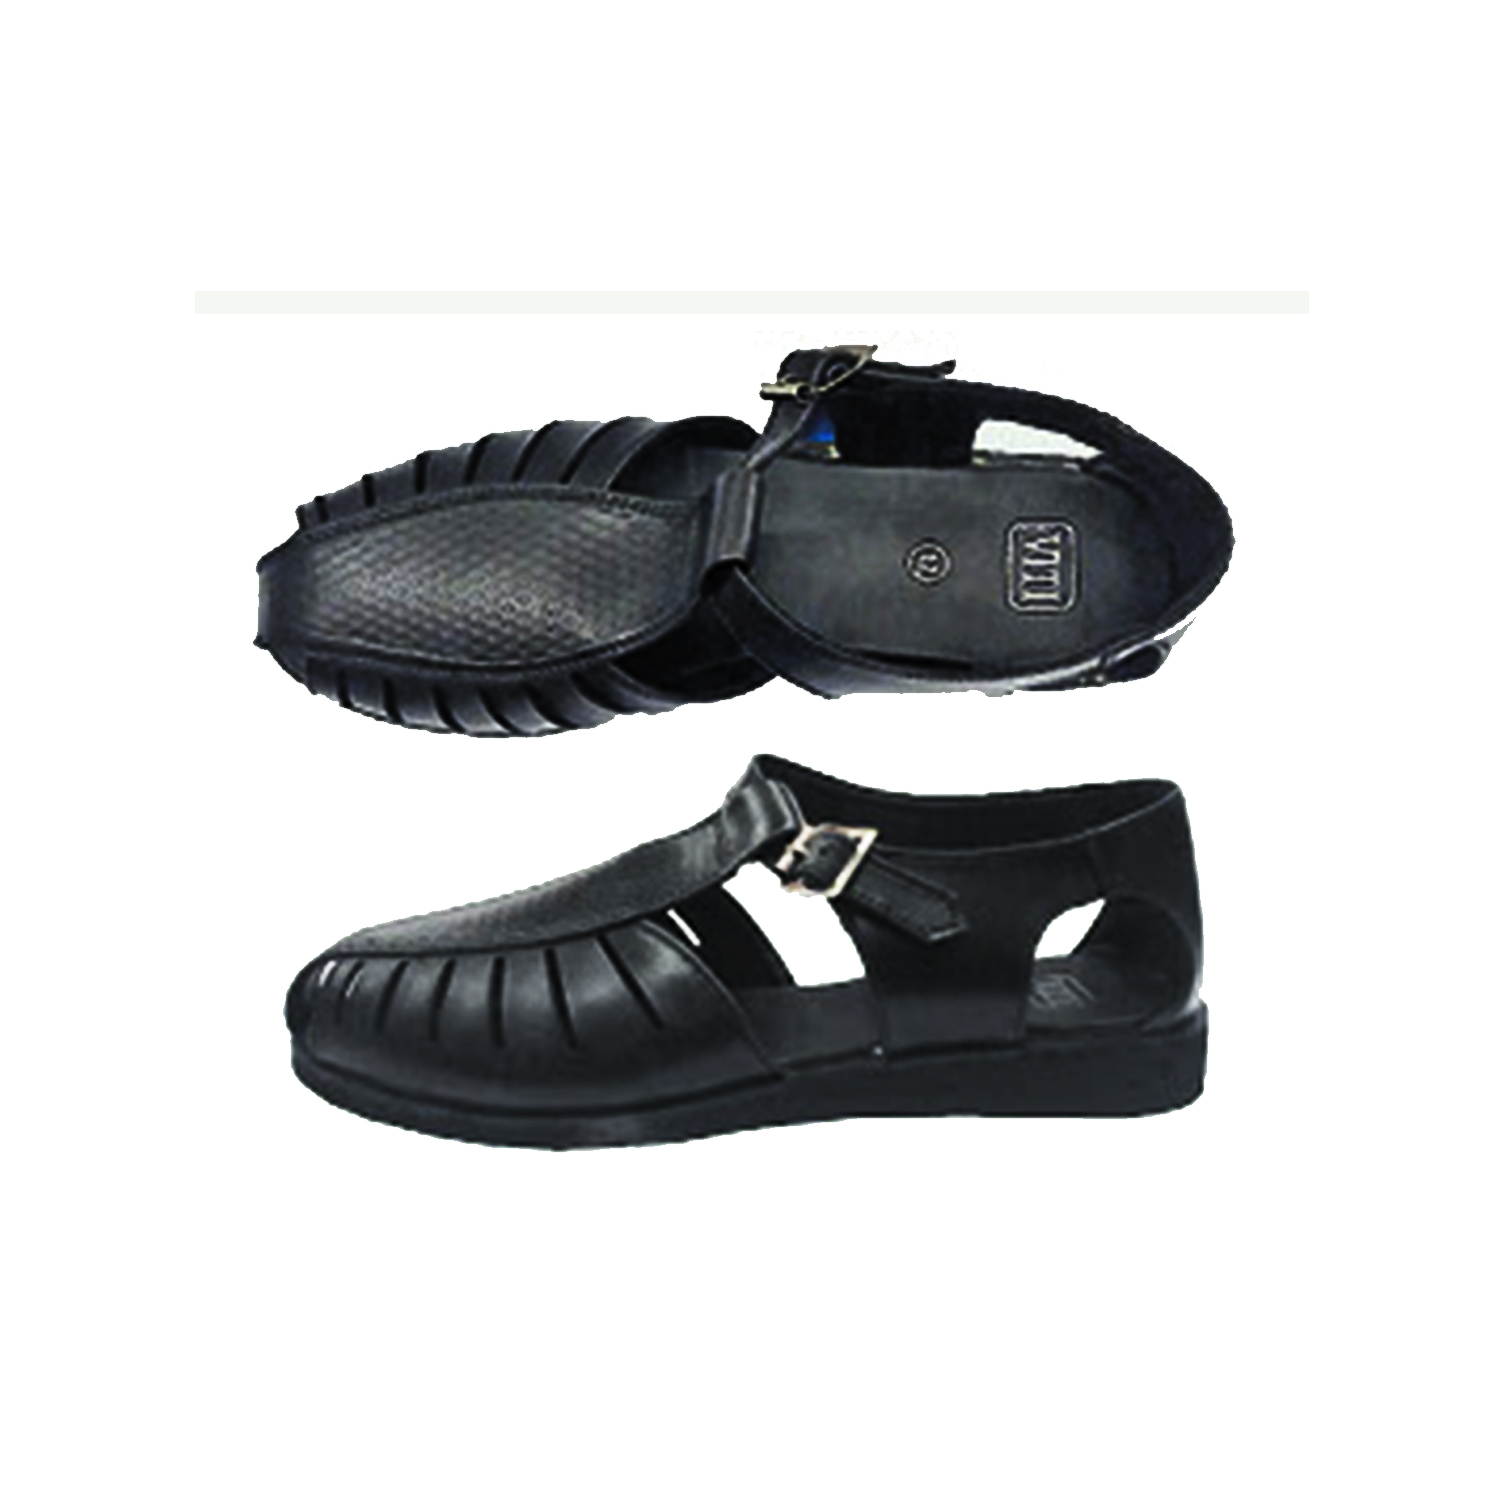 Viti School Sandals Size: 6-12 #4176 (Adult) - RB Patel Group